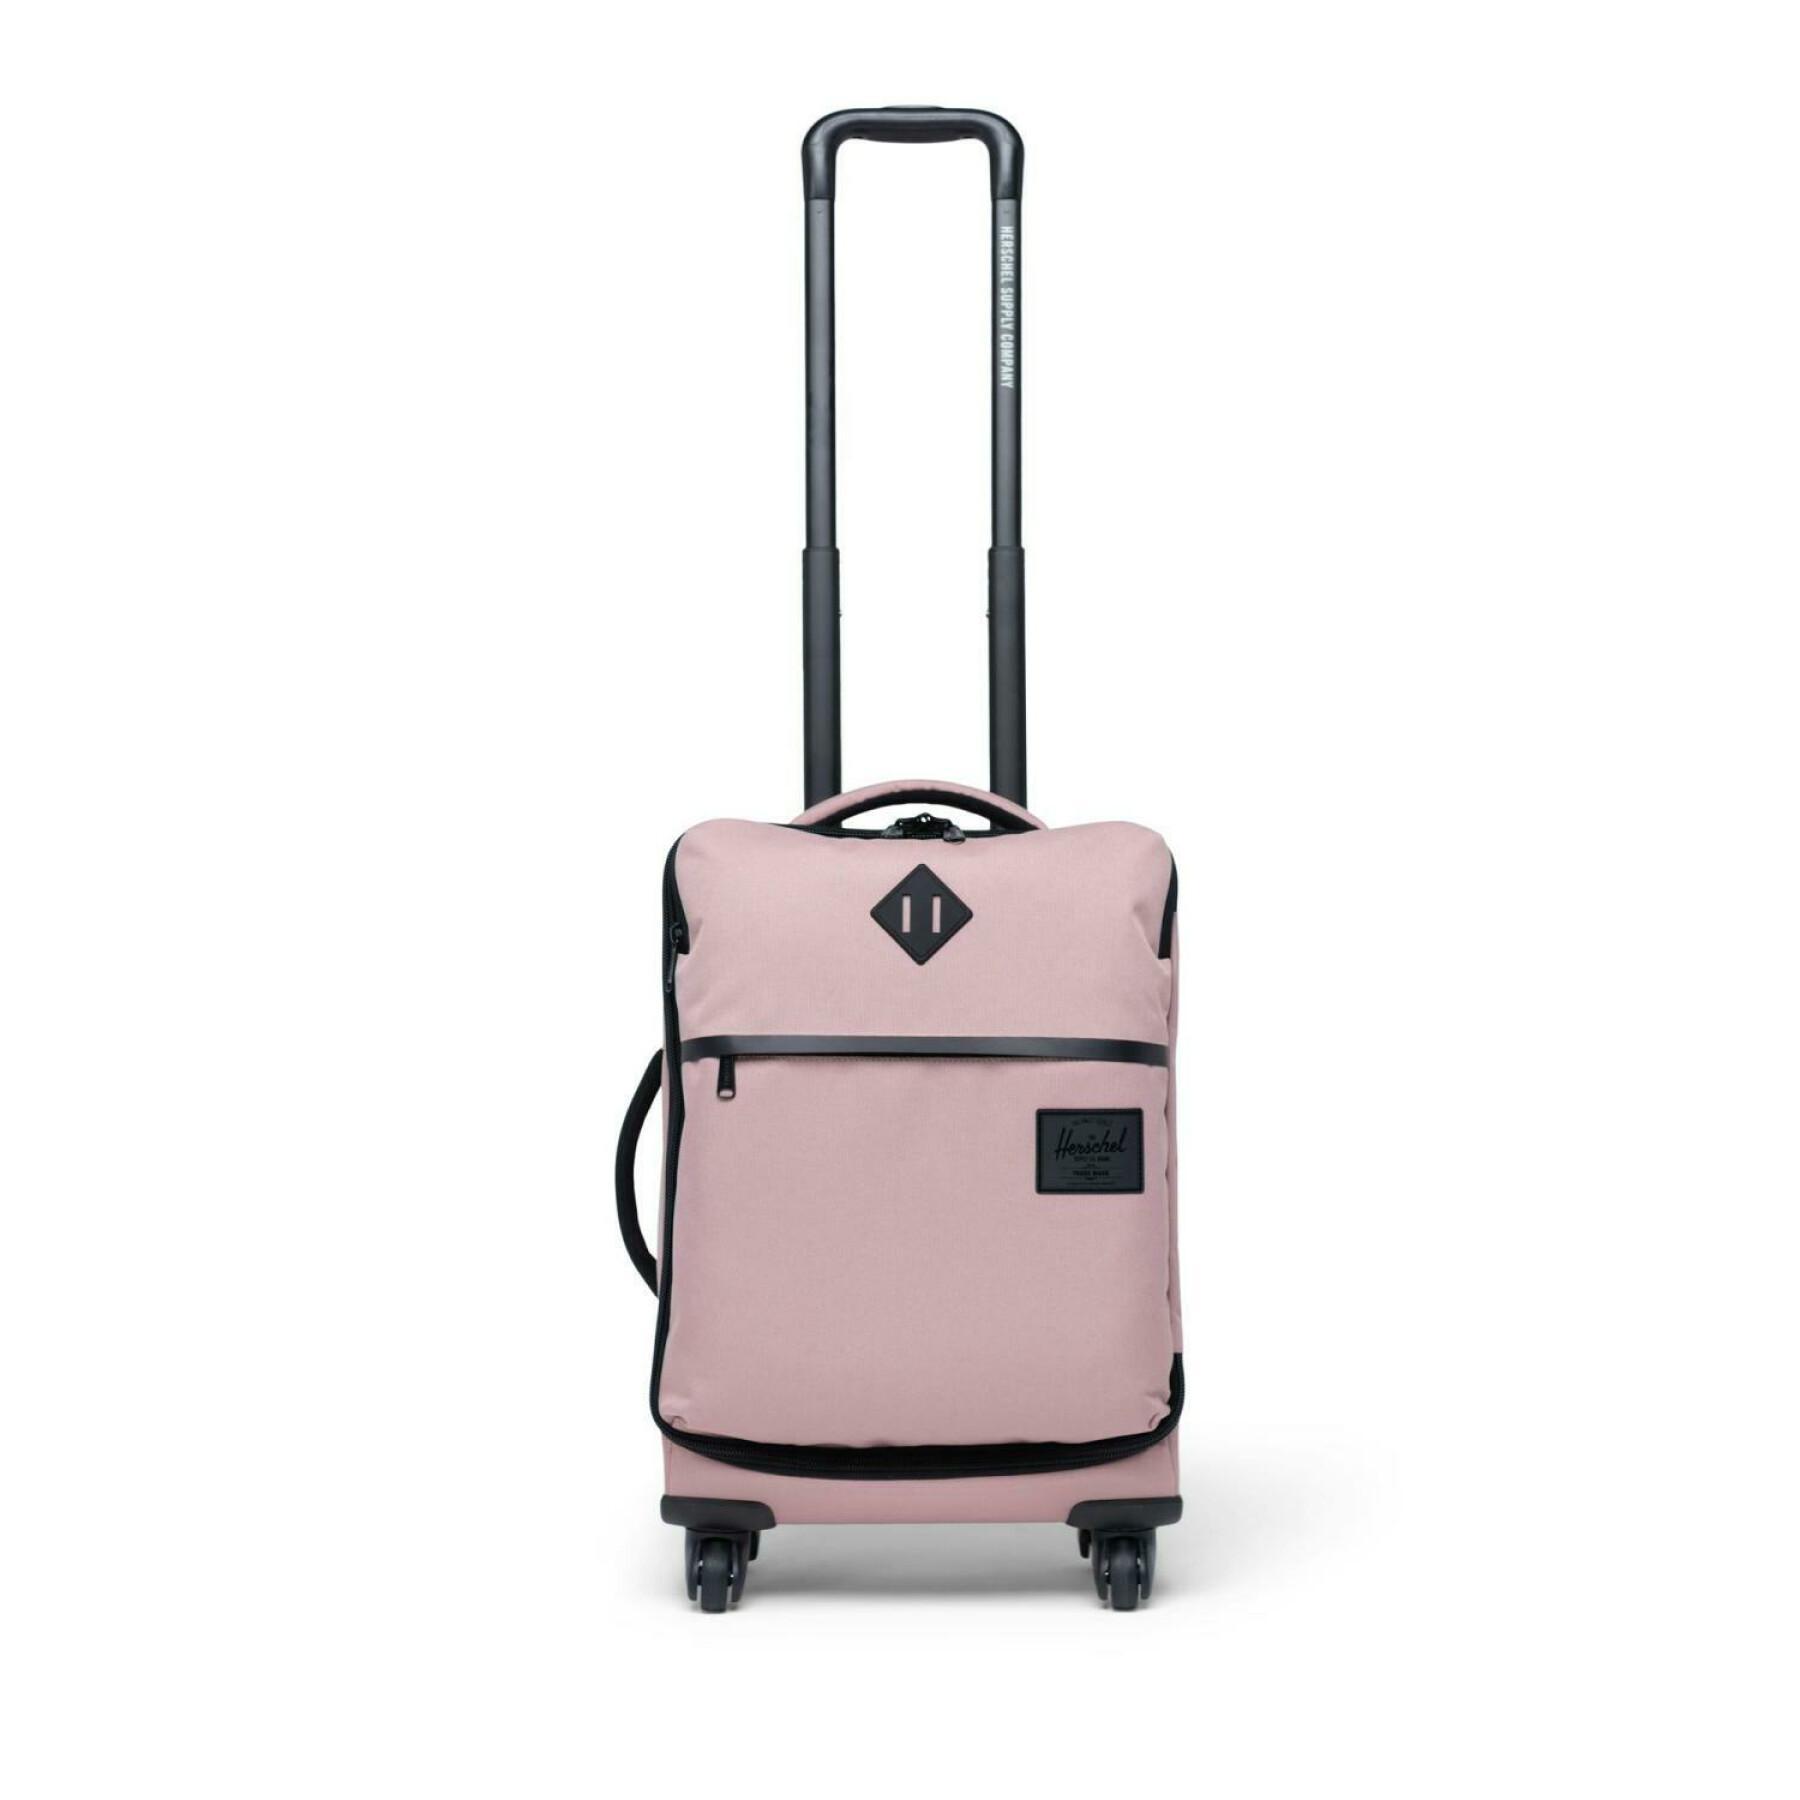 Suitcase Herschel Highland Carry-on